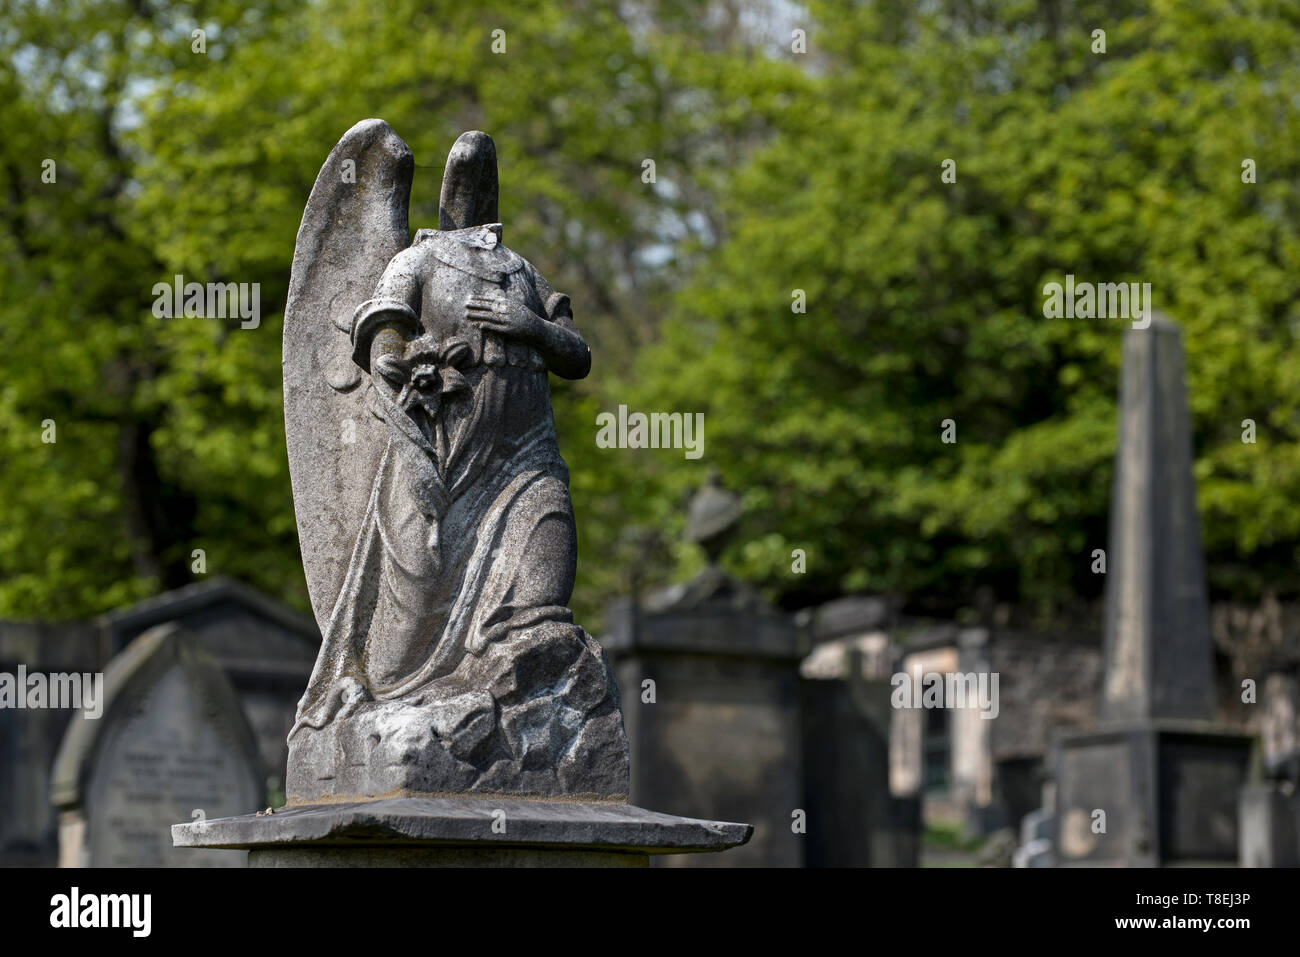 Damaged figure of an angel in New Calton Burial Ground, Edinburgh, Scotland, UK. Stock Photo